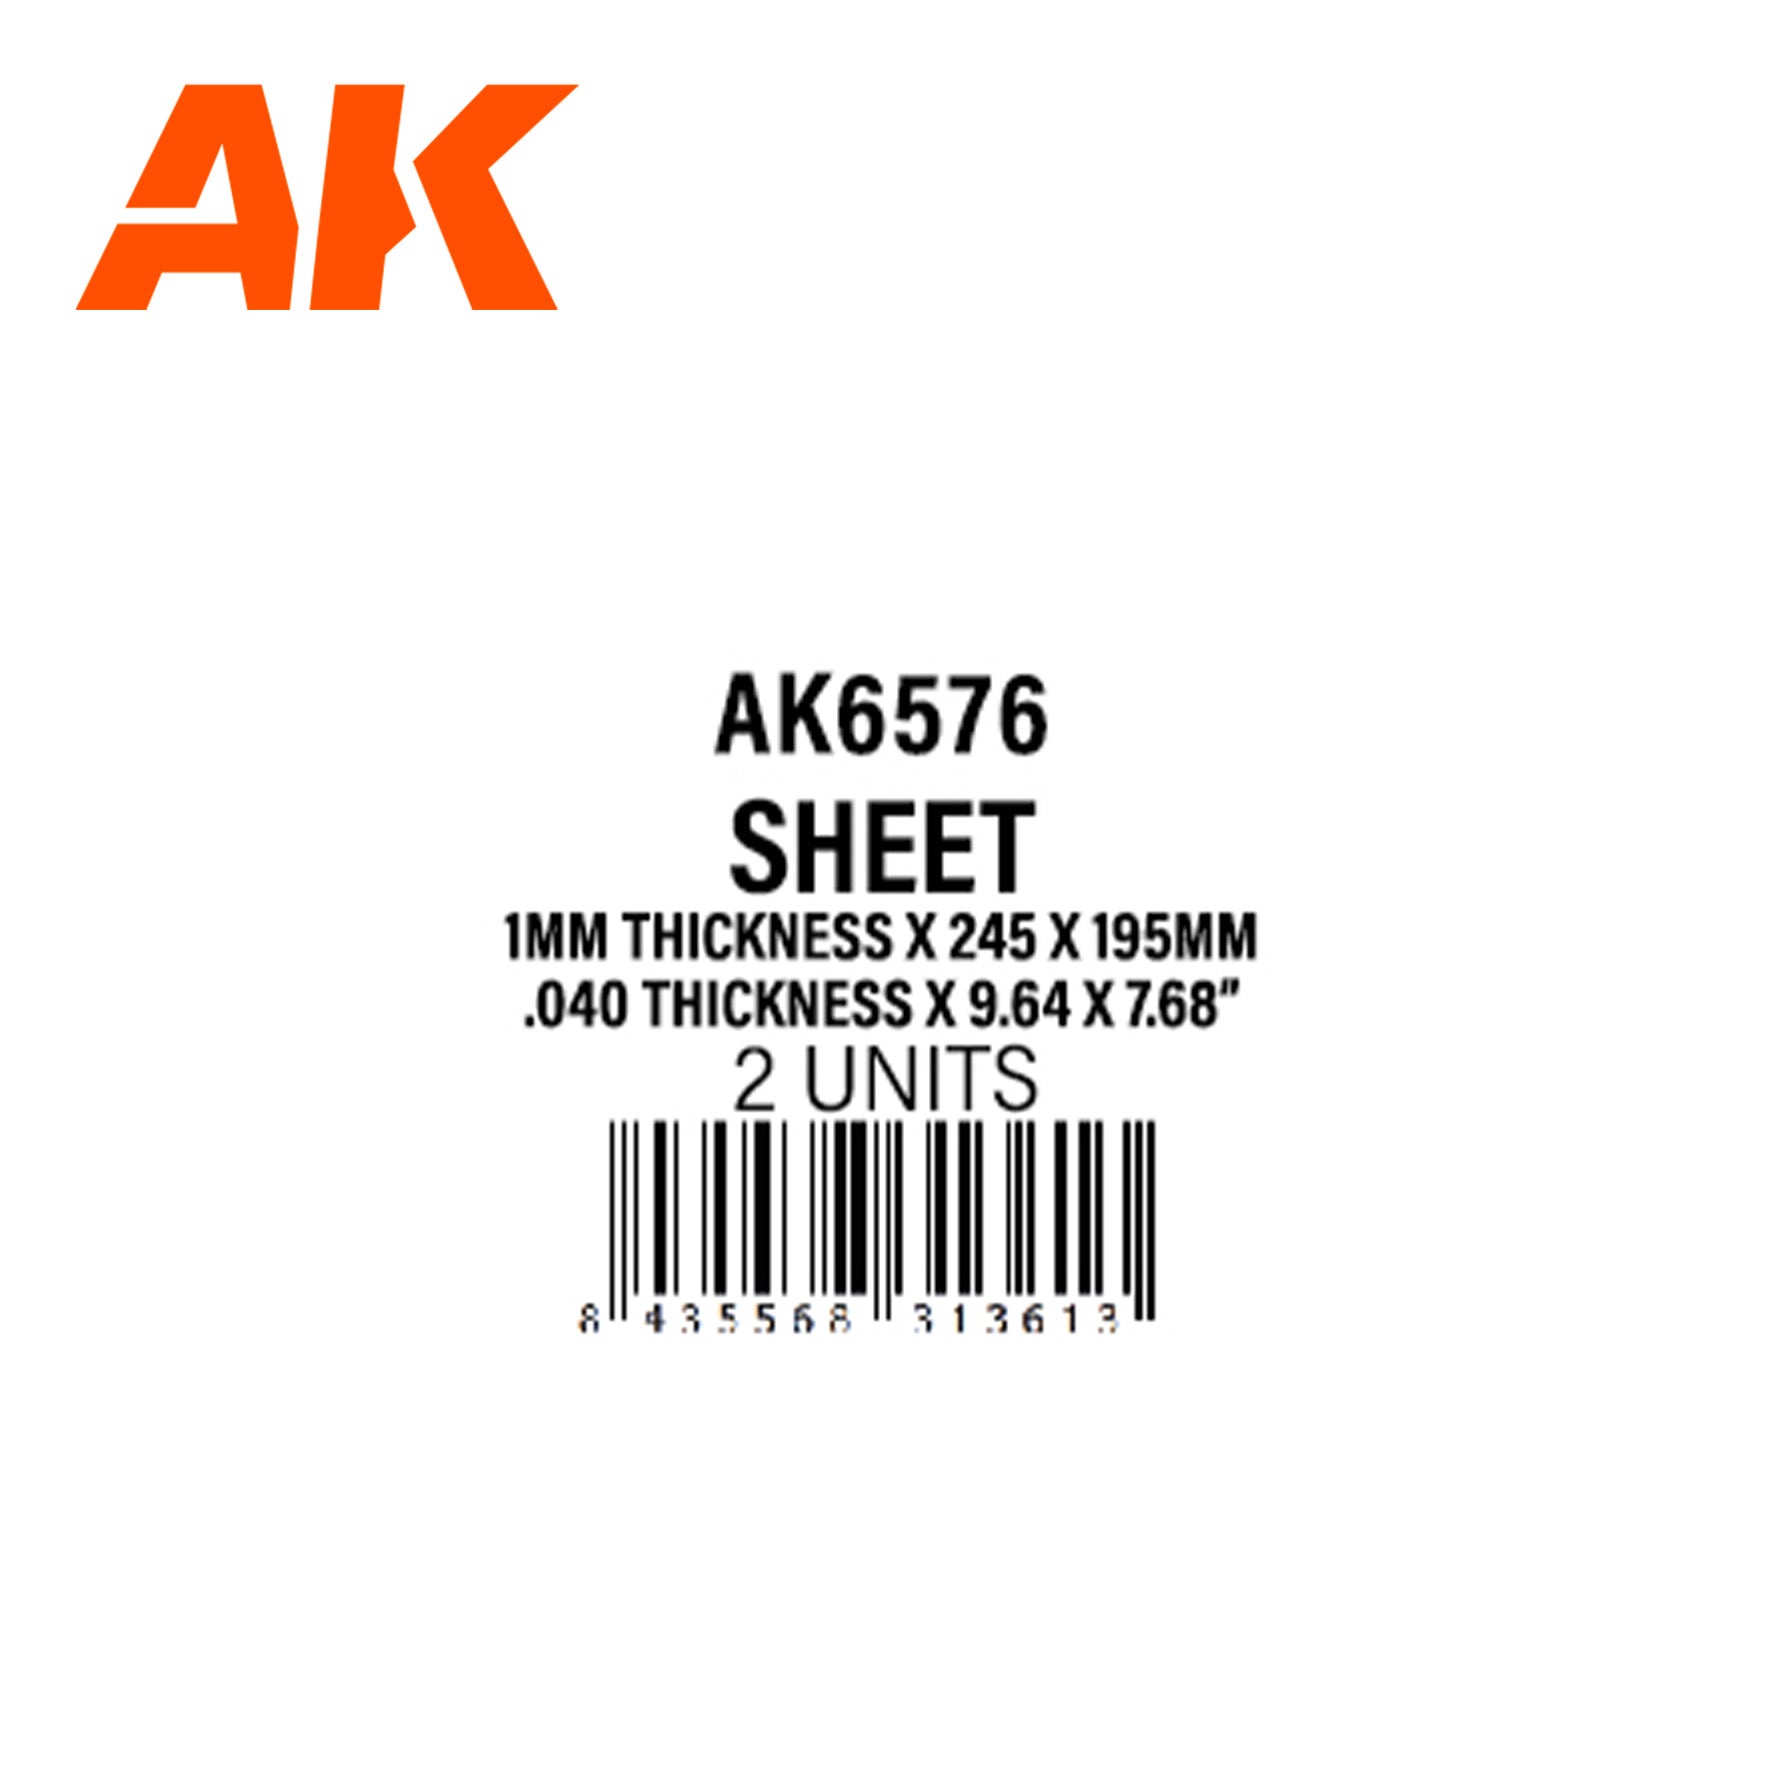 AK6576 - Styrene sheet - 1mm thickness x 245 x 195mm